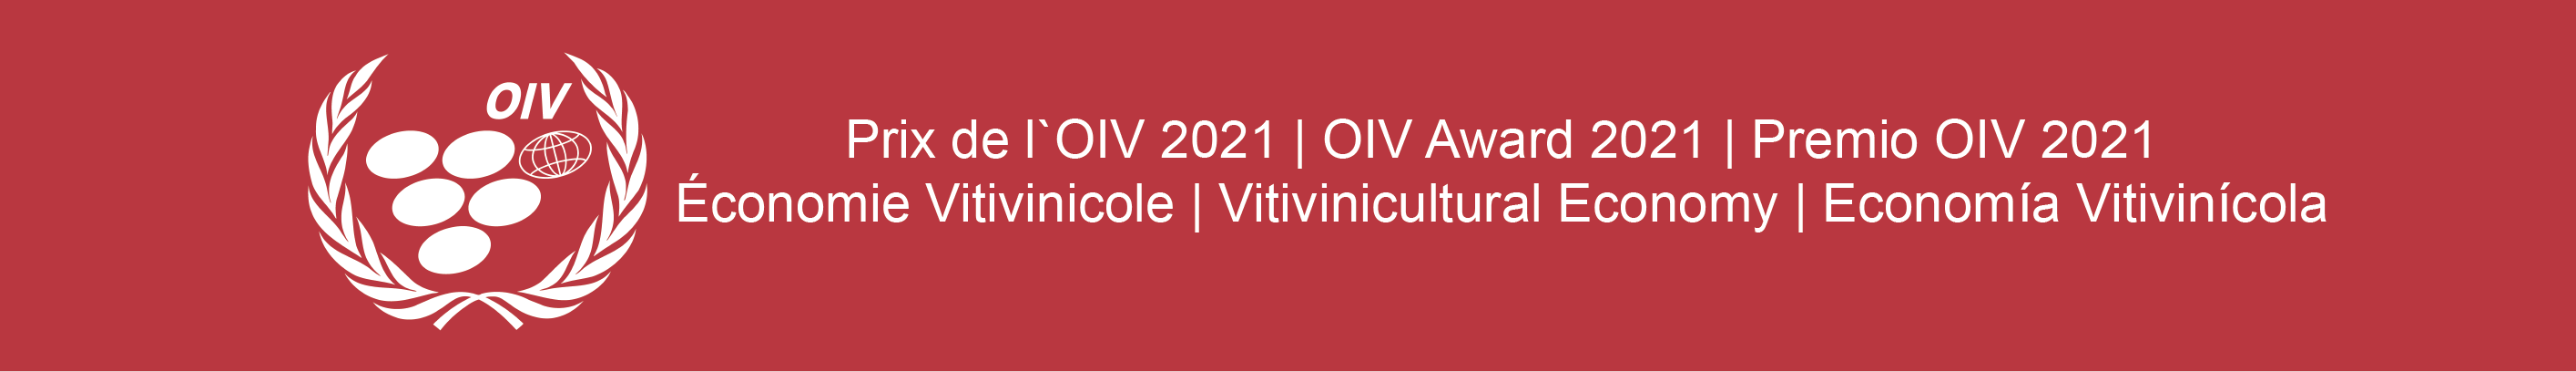 Premios OIV 2021